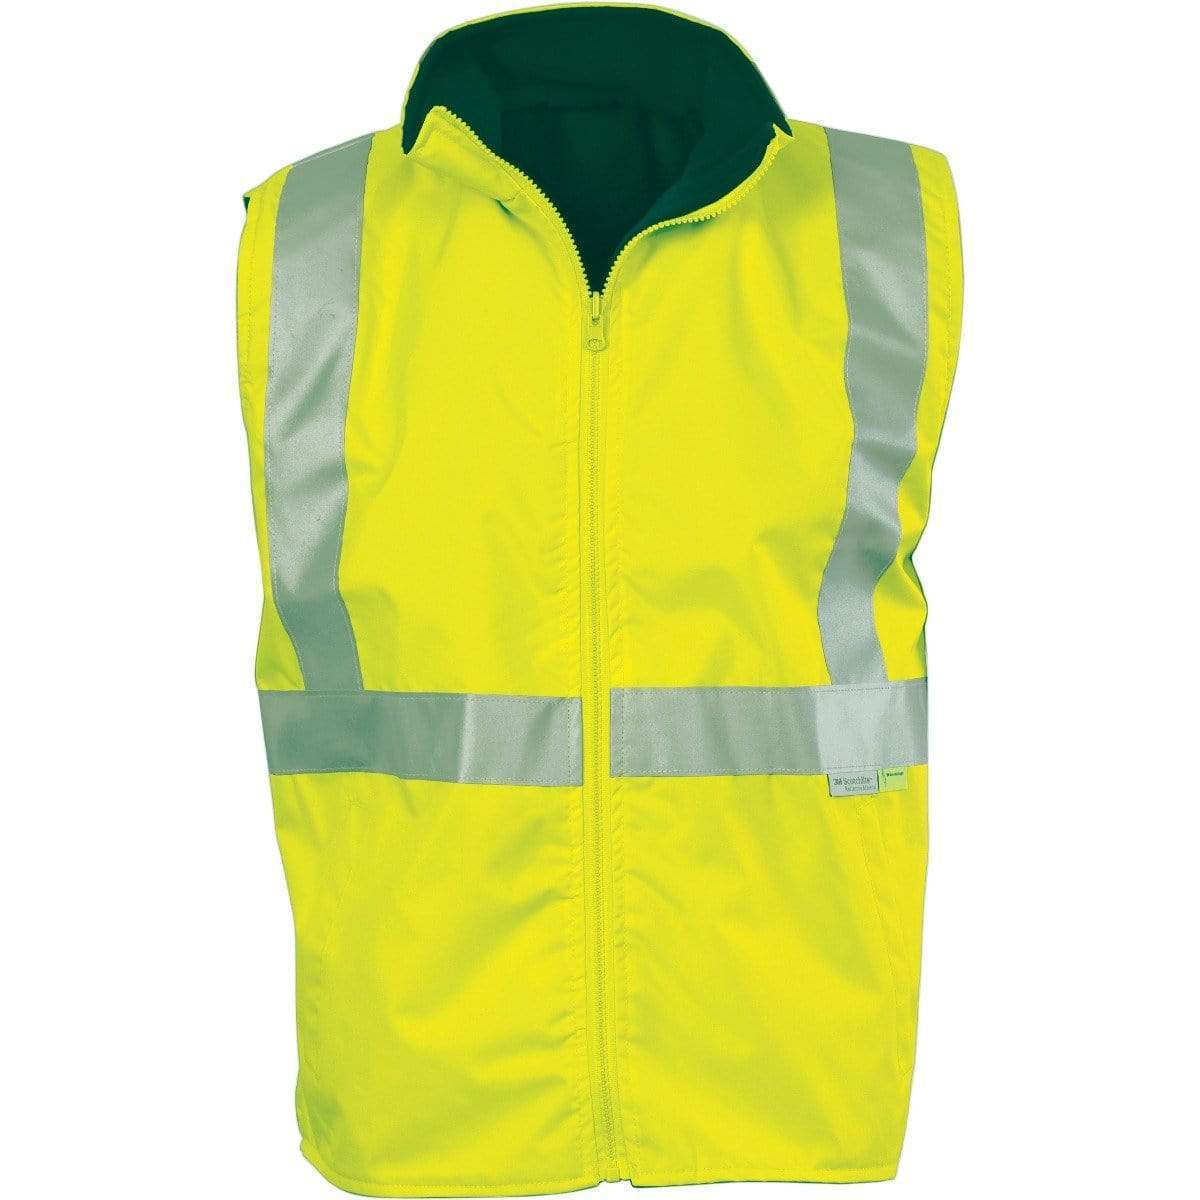 Dnc Workwear Hi-vis Reversible Vest With 3m Reflective Tape - 3865 Work Wear DNC Workwear Yellow/Bottle Green S 